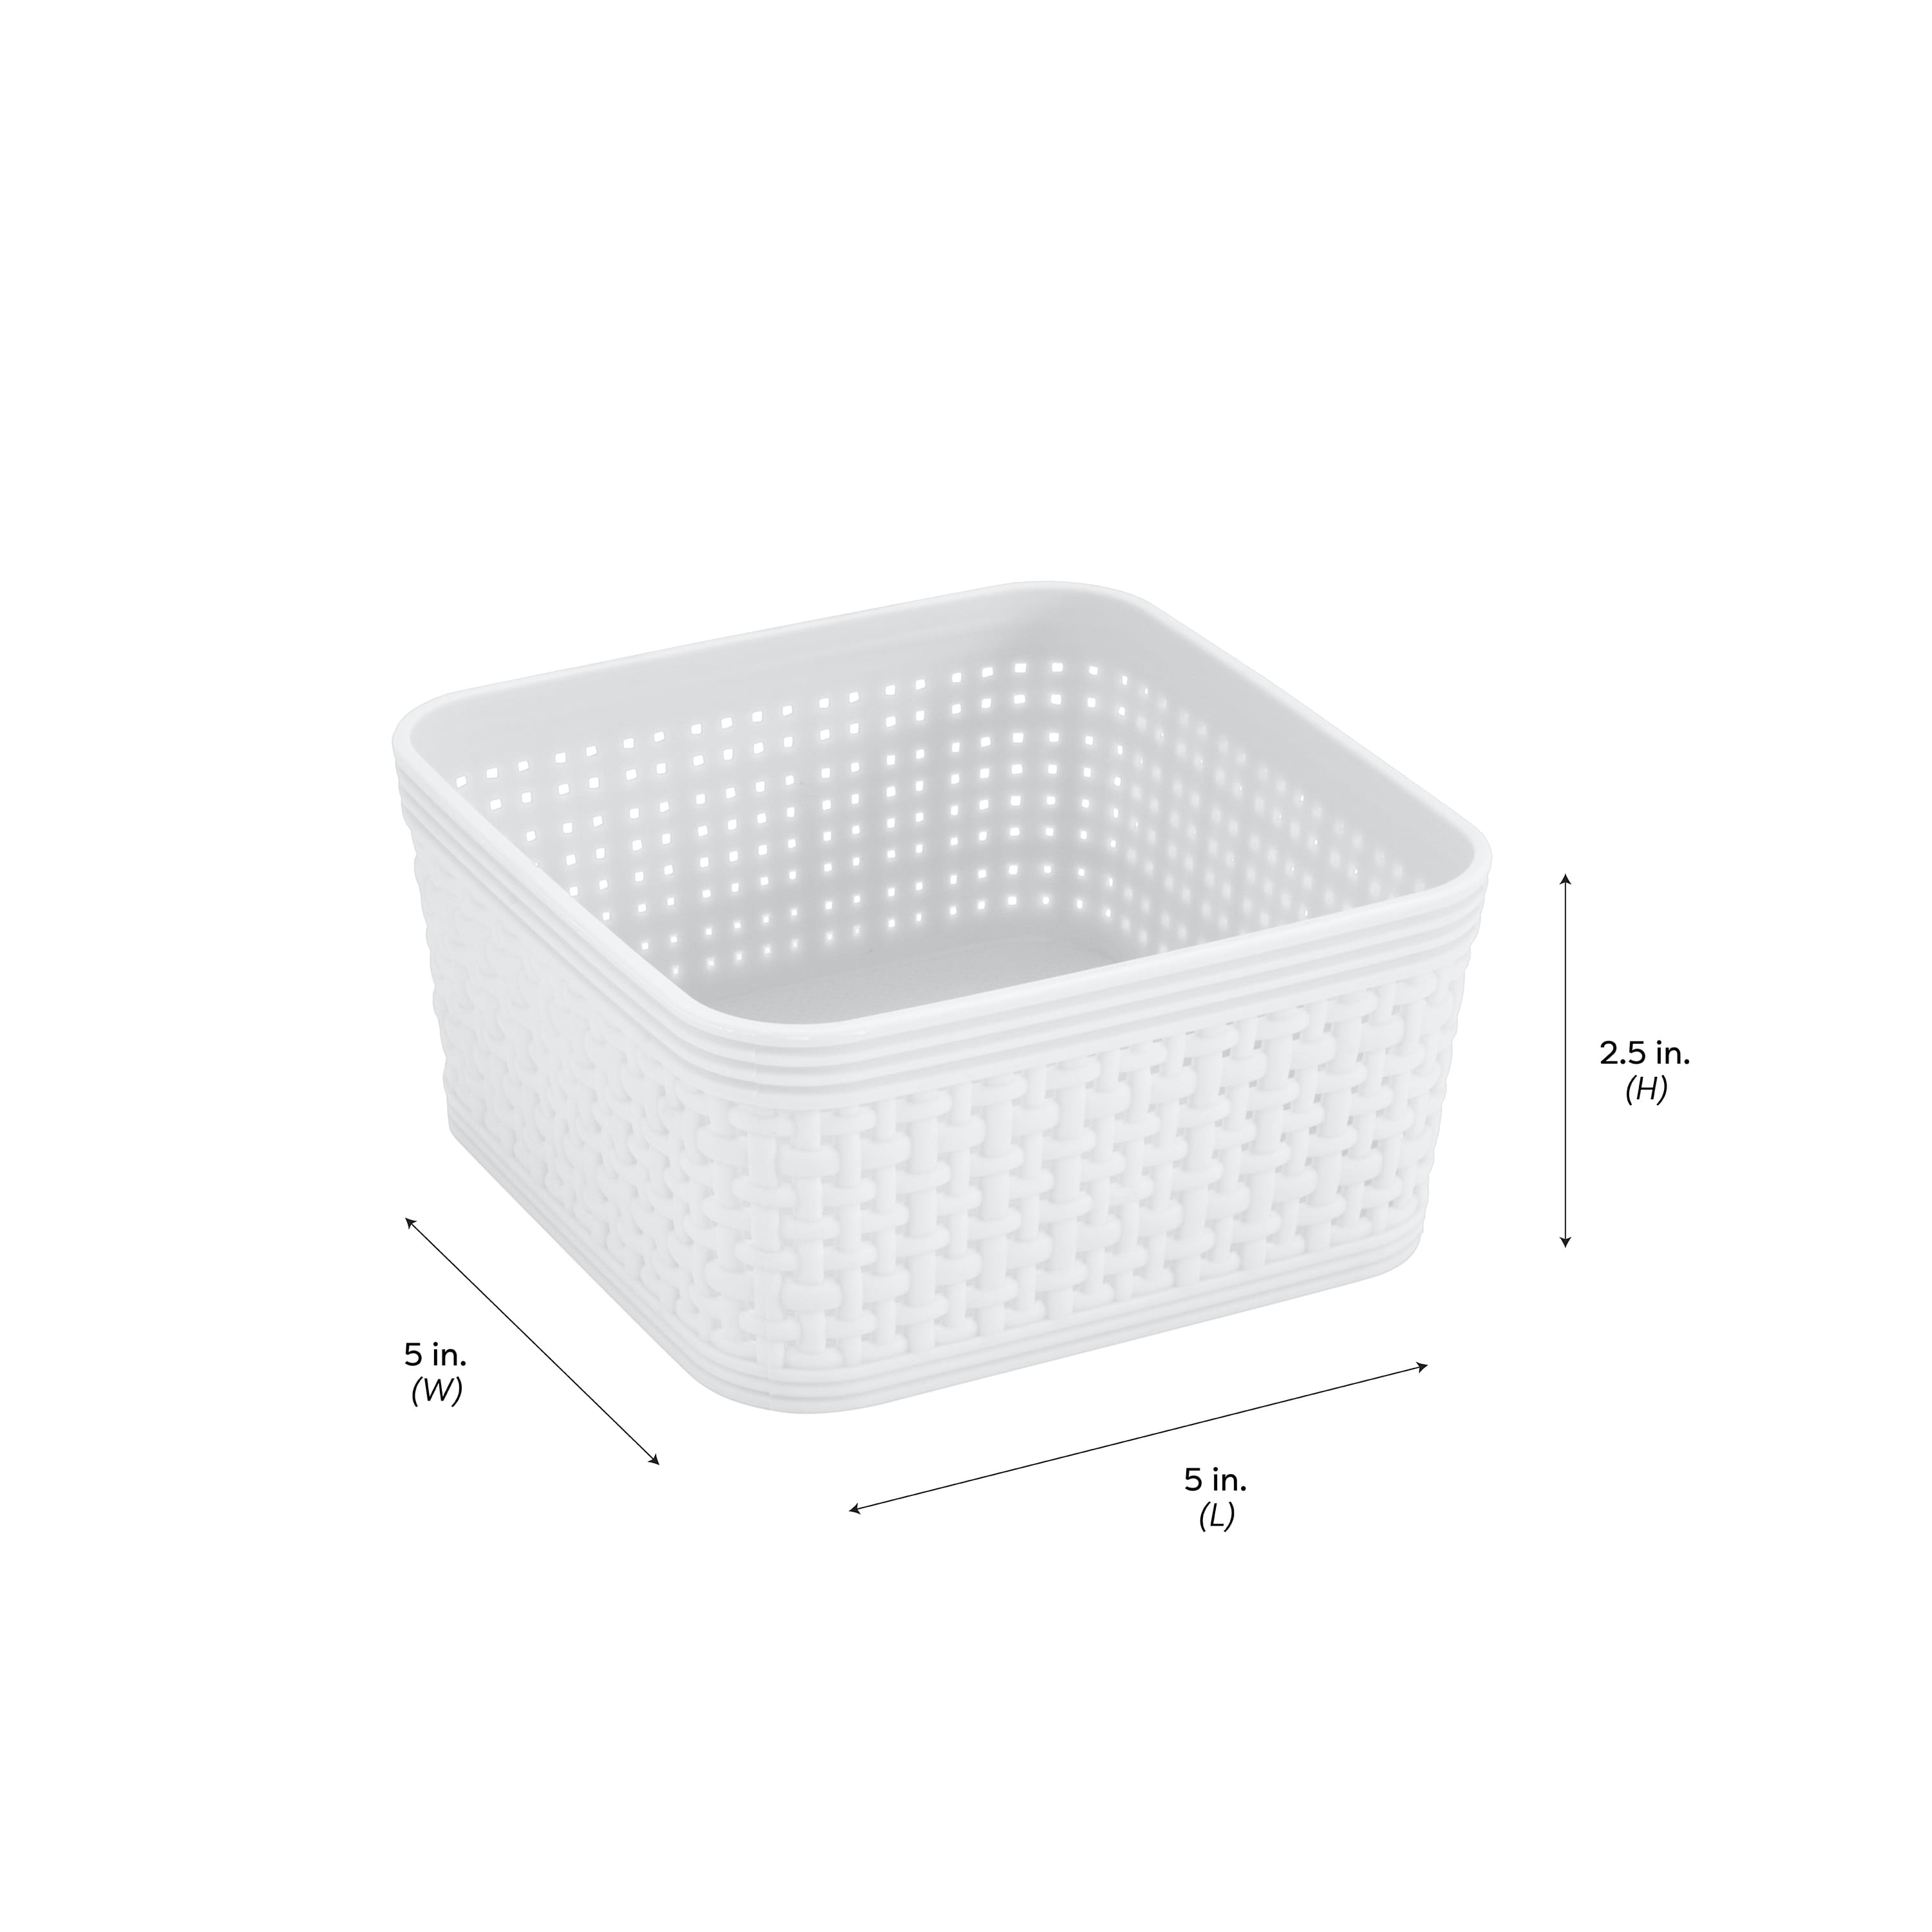 Simplify White Square Organizing Baskets, 6ct.